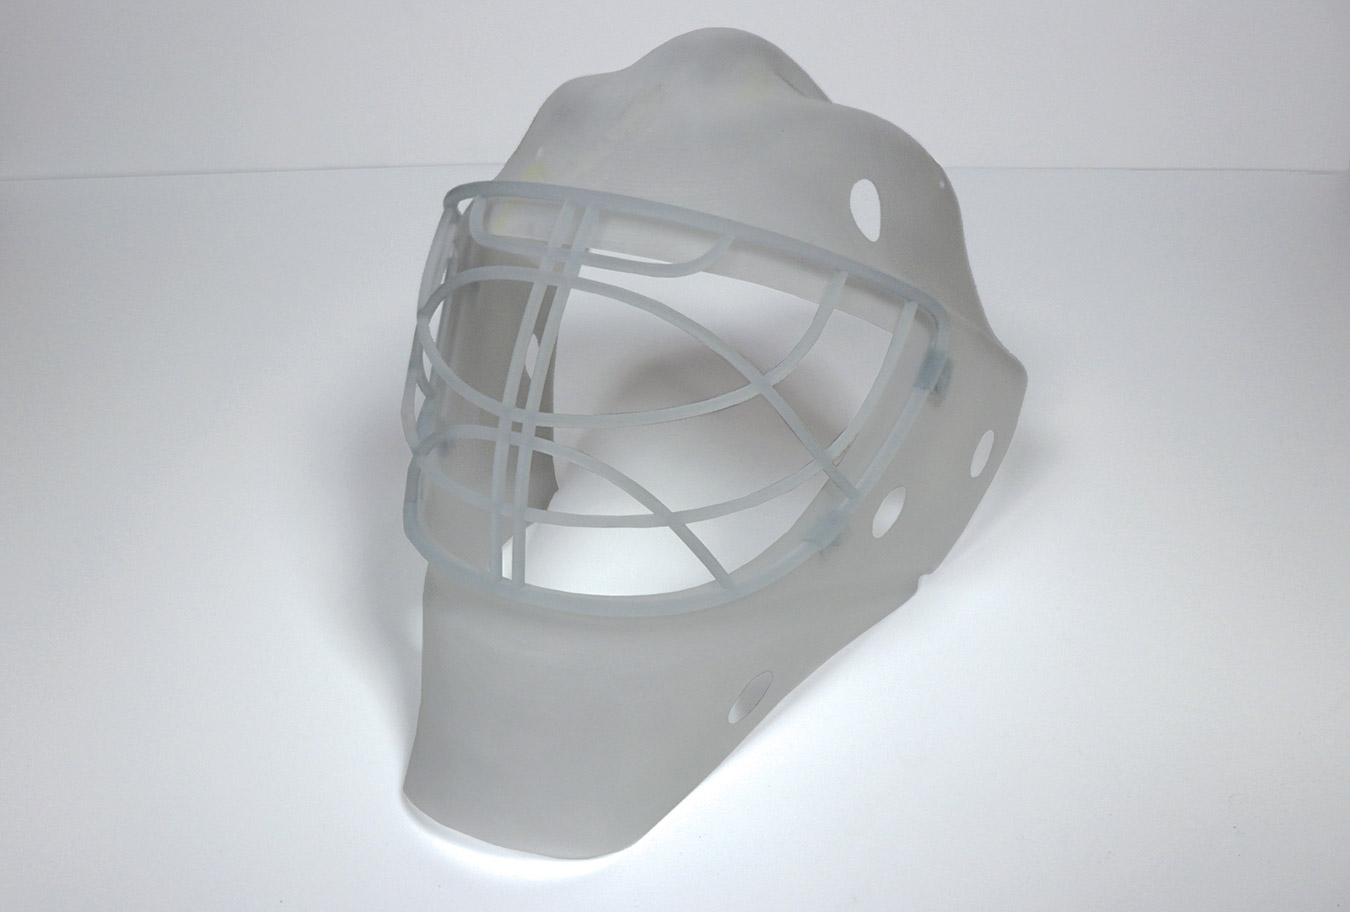 3D Printed Sports Gear